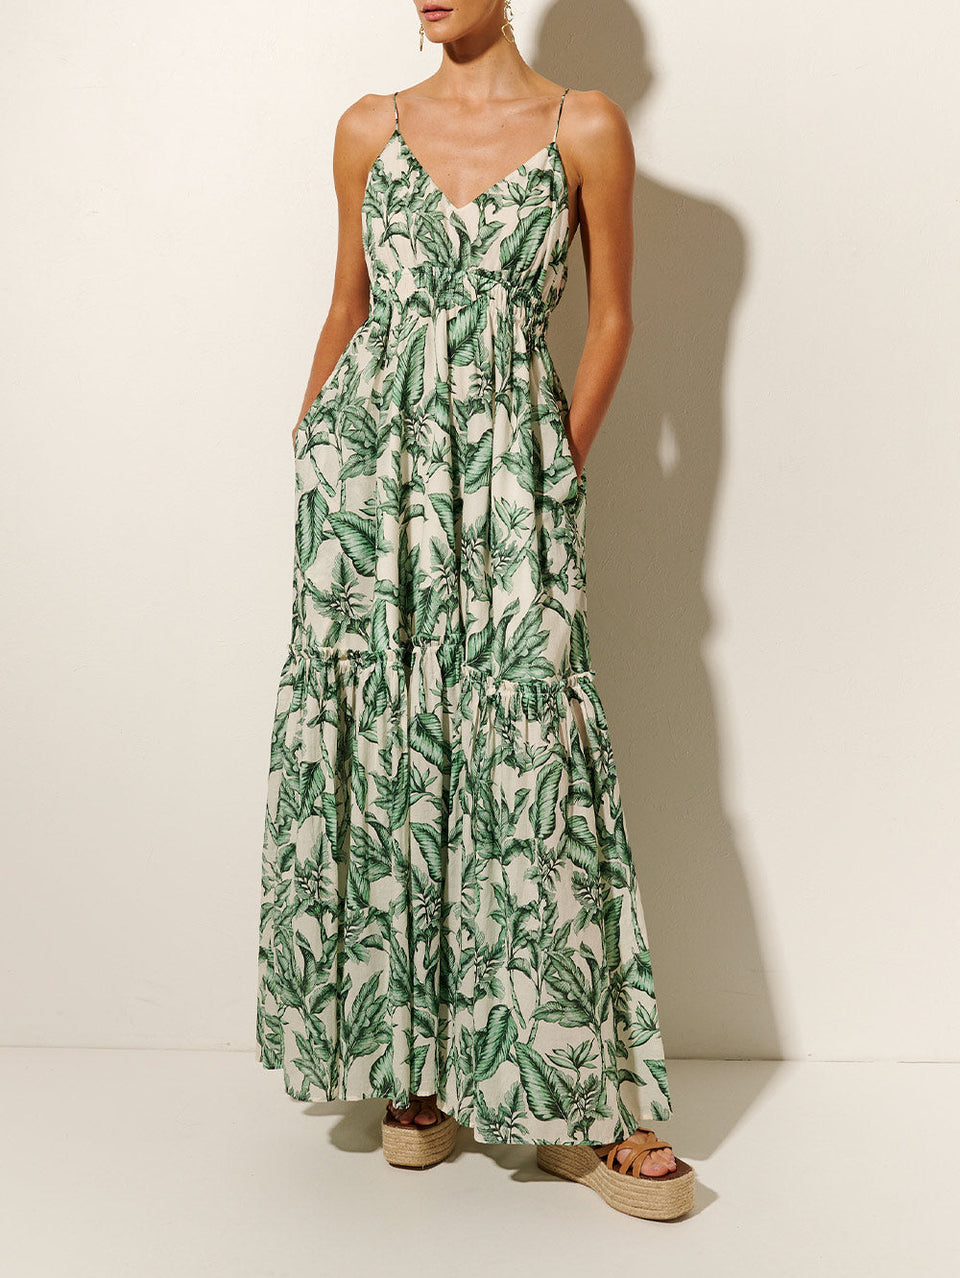 Tropico Maxi Dress KIVARI | Model wears palm leaf printed maxi dress